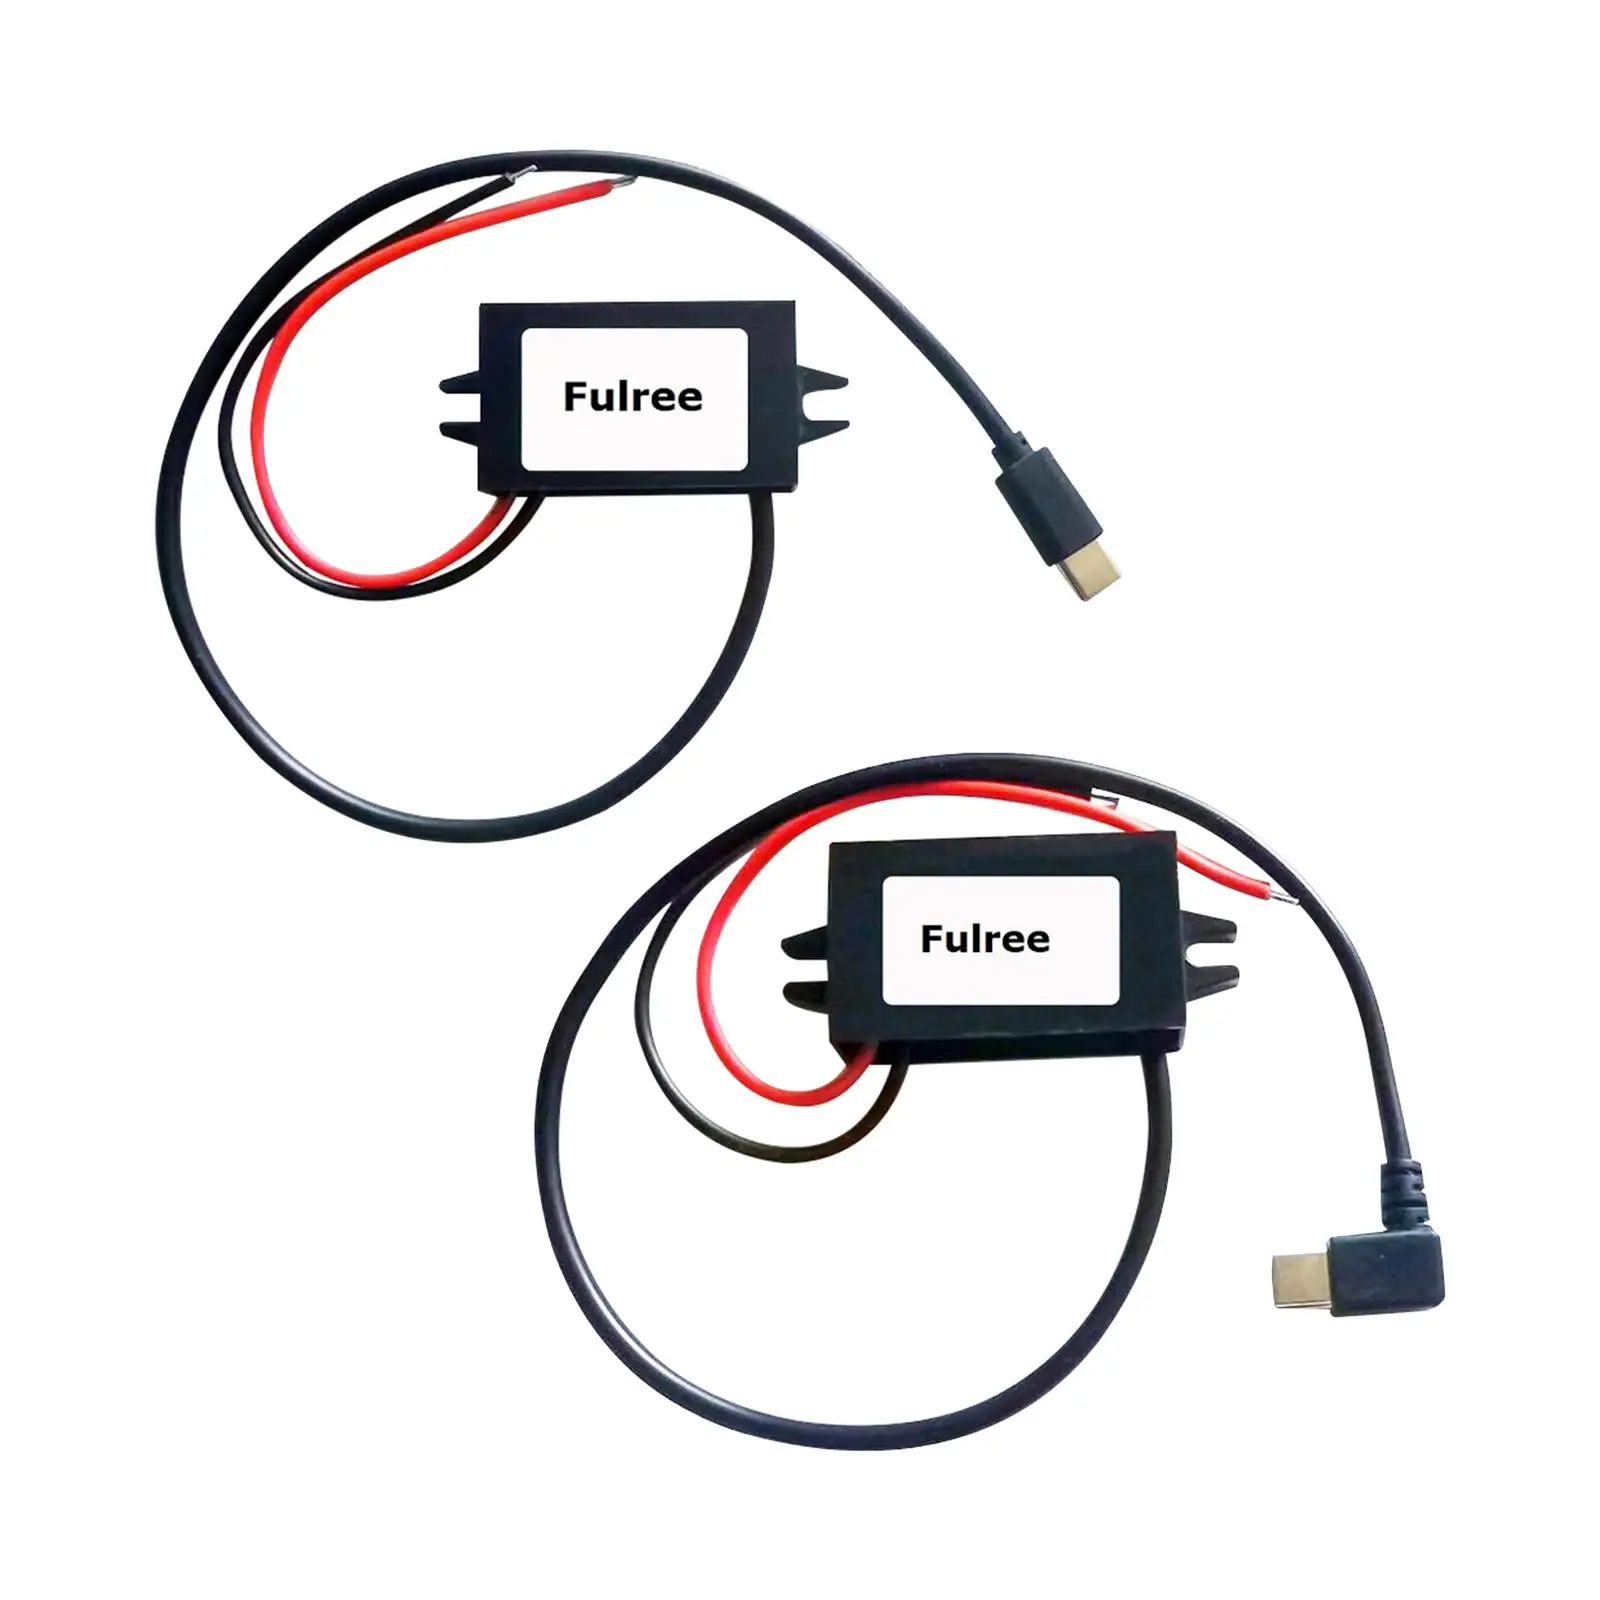 12V to 5V Converter Reduced Voltage Regulator Power Adapter Converter for Electronic Device